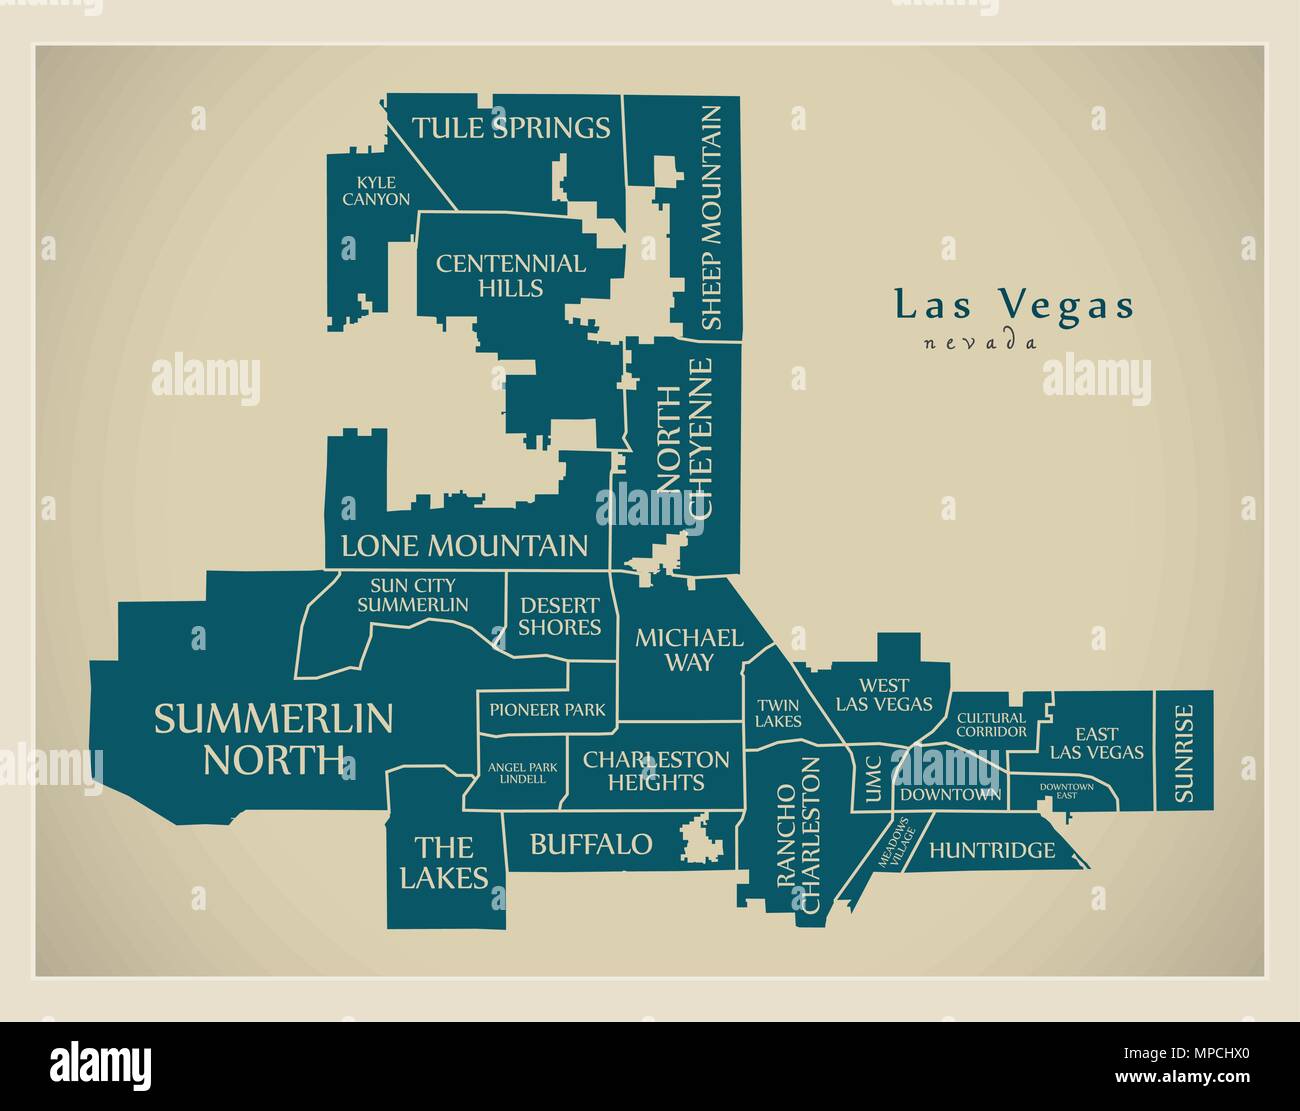 Ward Maps  City of North Las Vegas